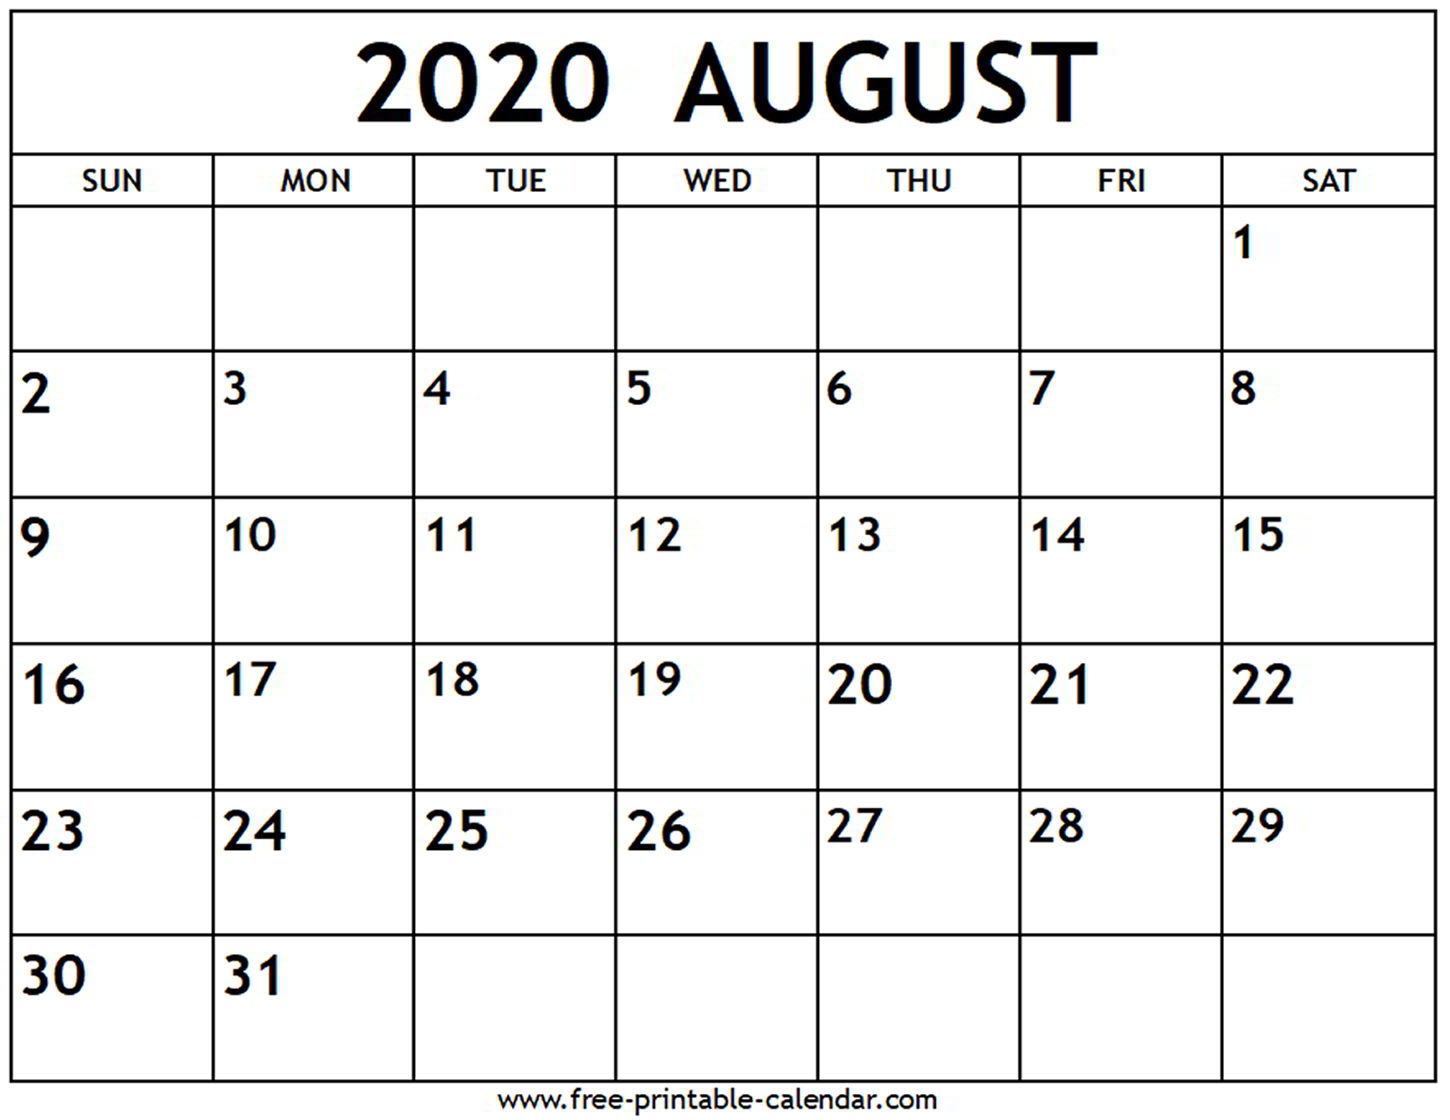 Print A Calendar August 2020 - Wpa.wpart.co